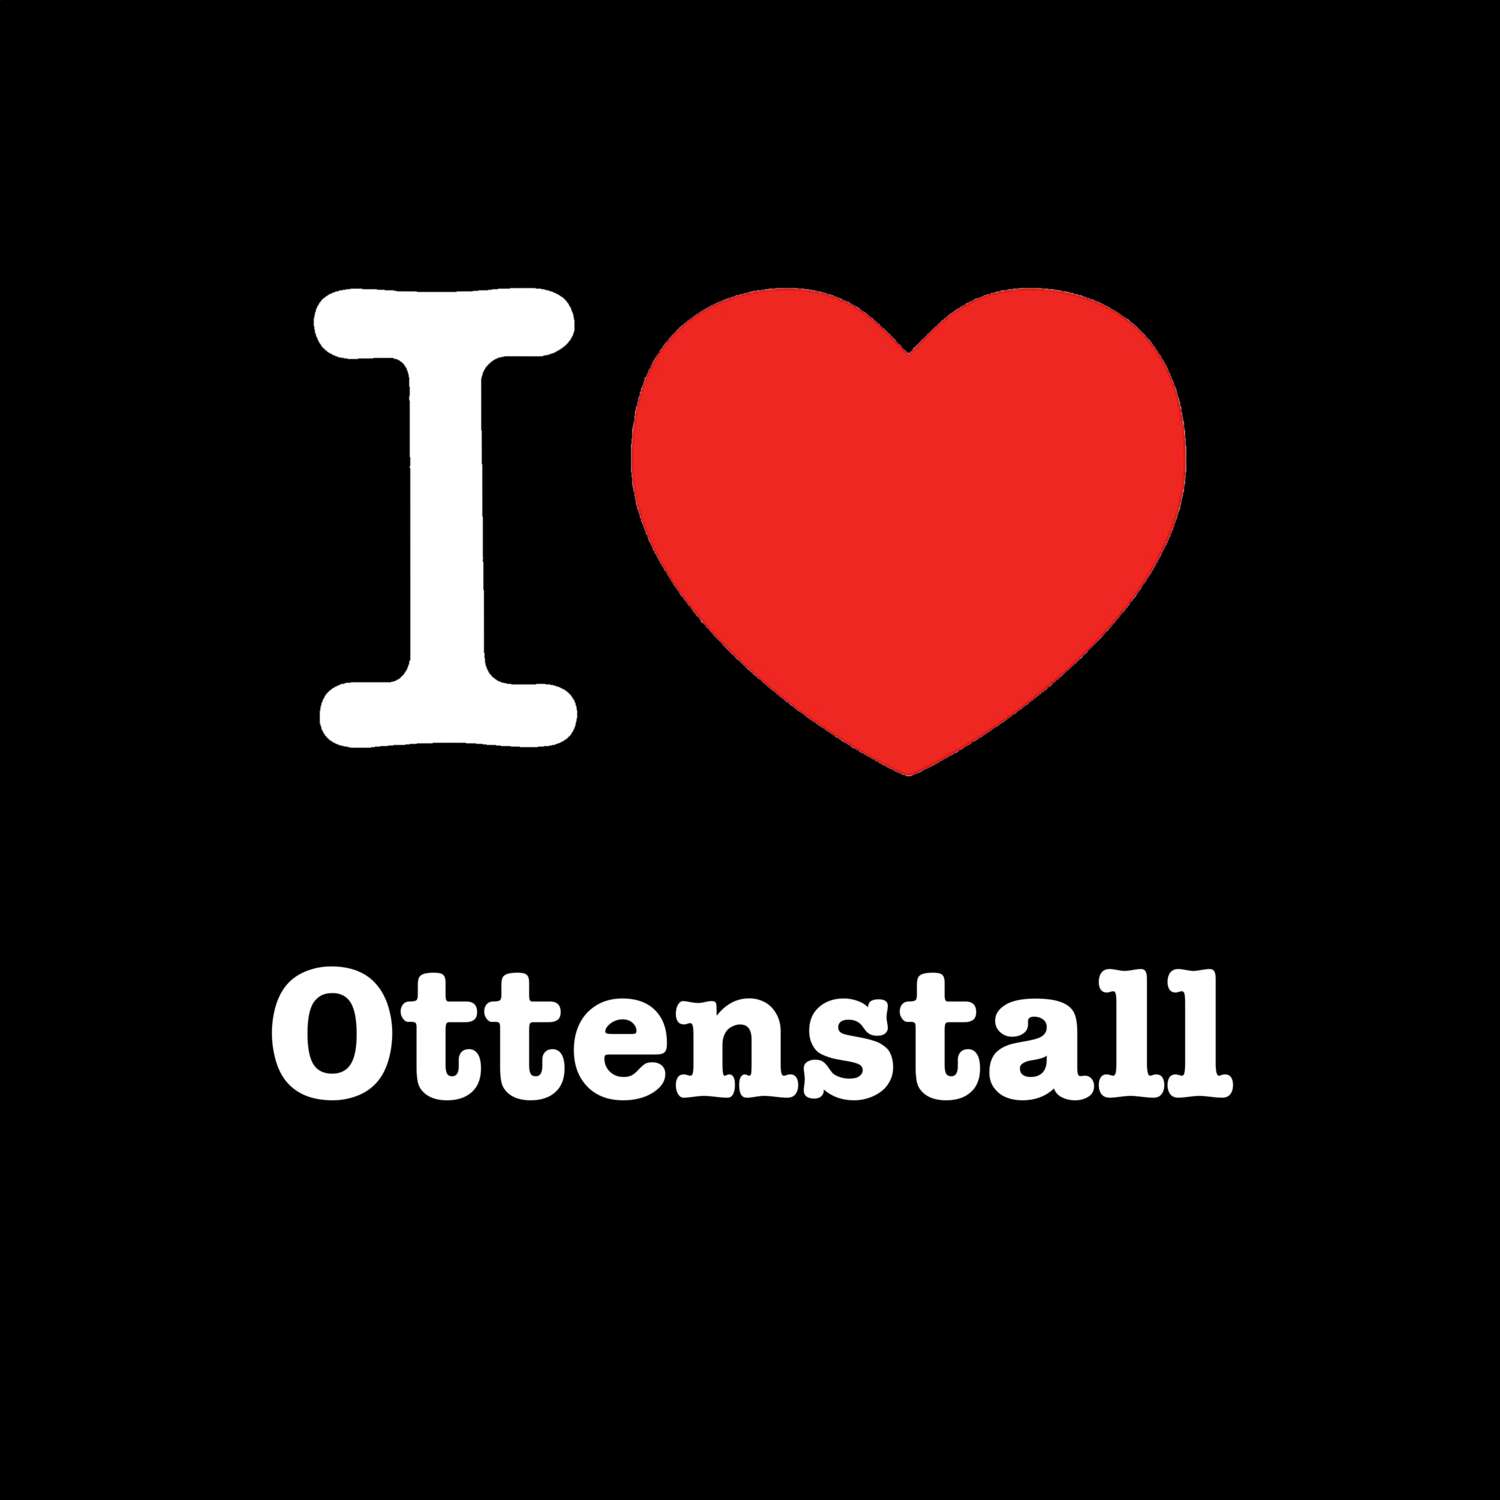 Ottenstall T-Shirt »I love«